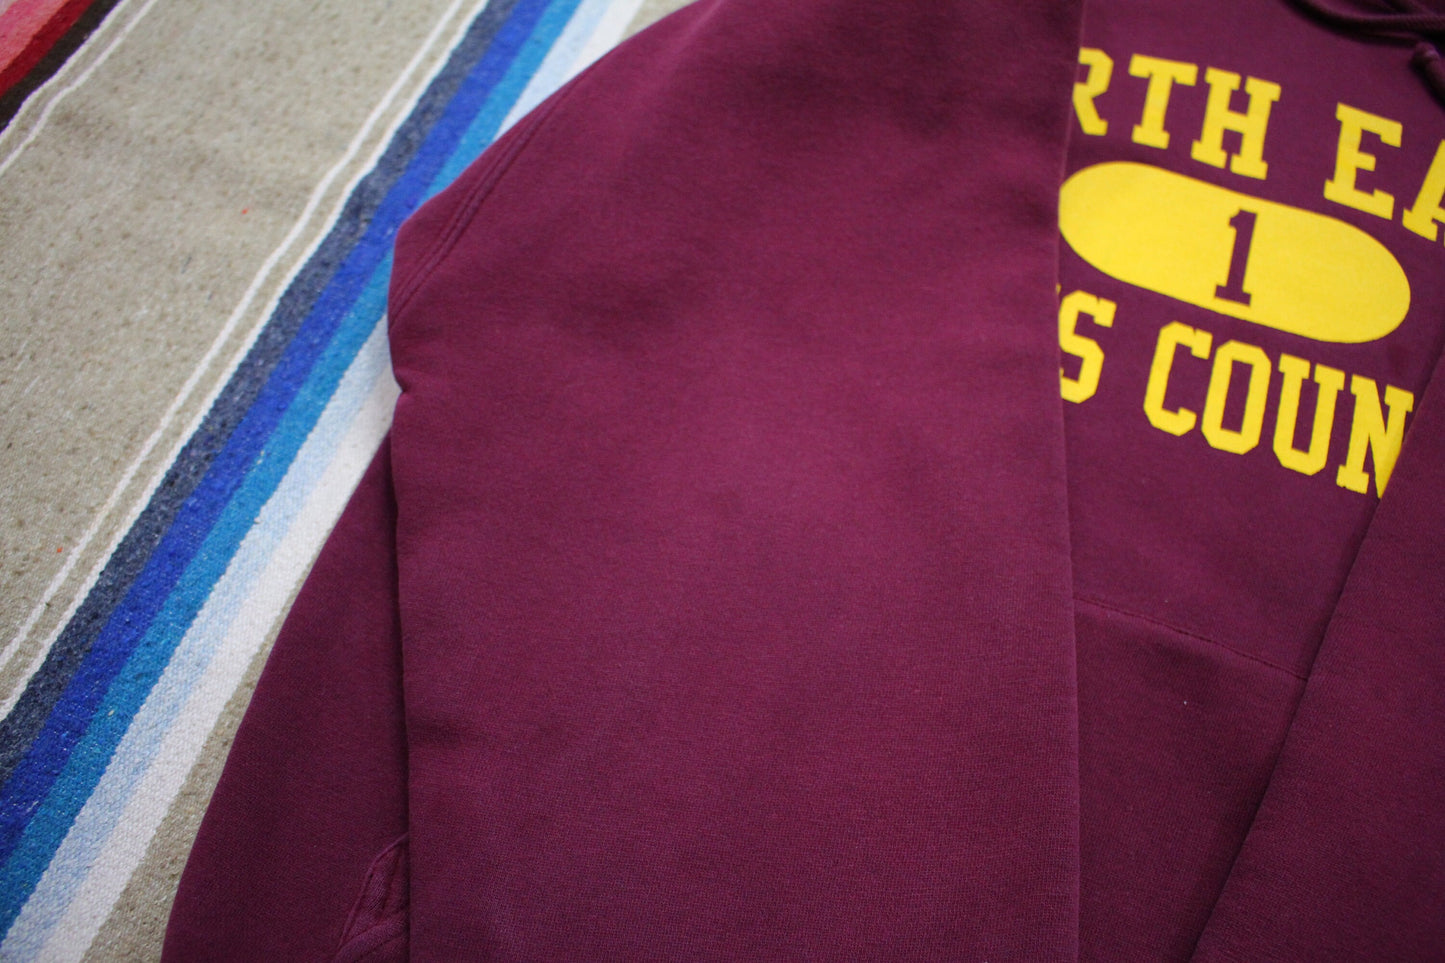 2010s Beimar North East Cross Country Hoodie Sweatshirt Size S/M